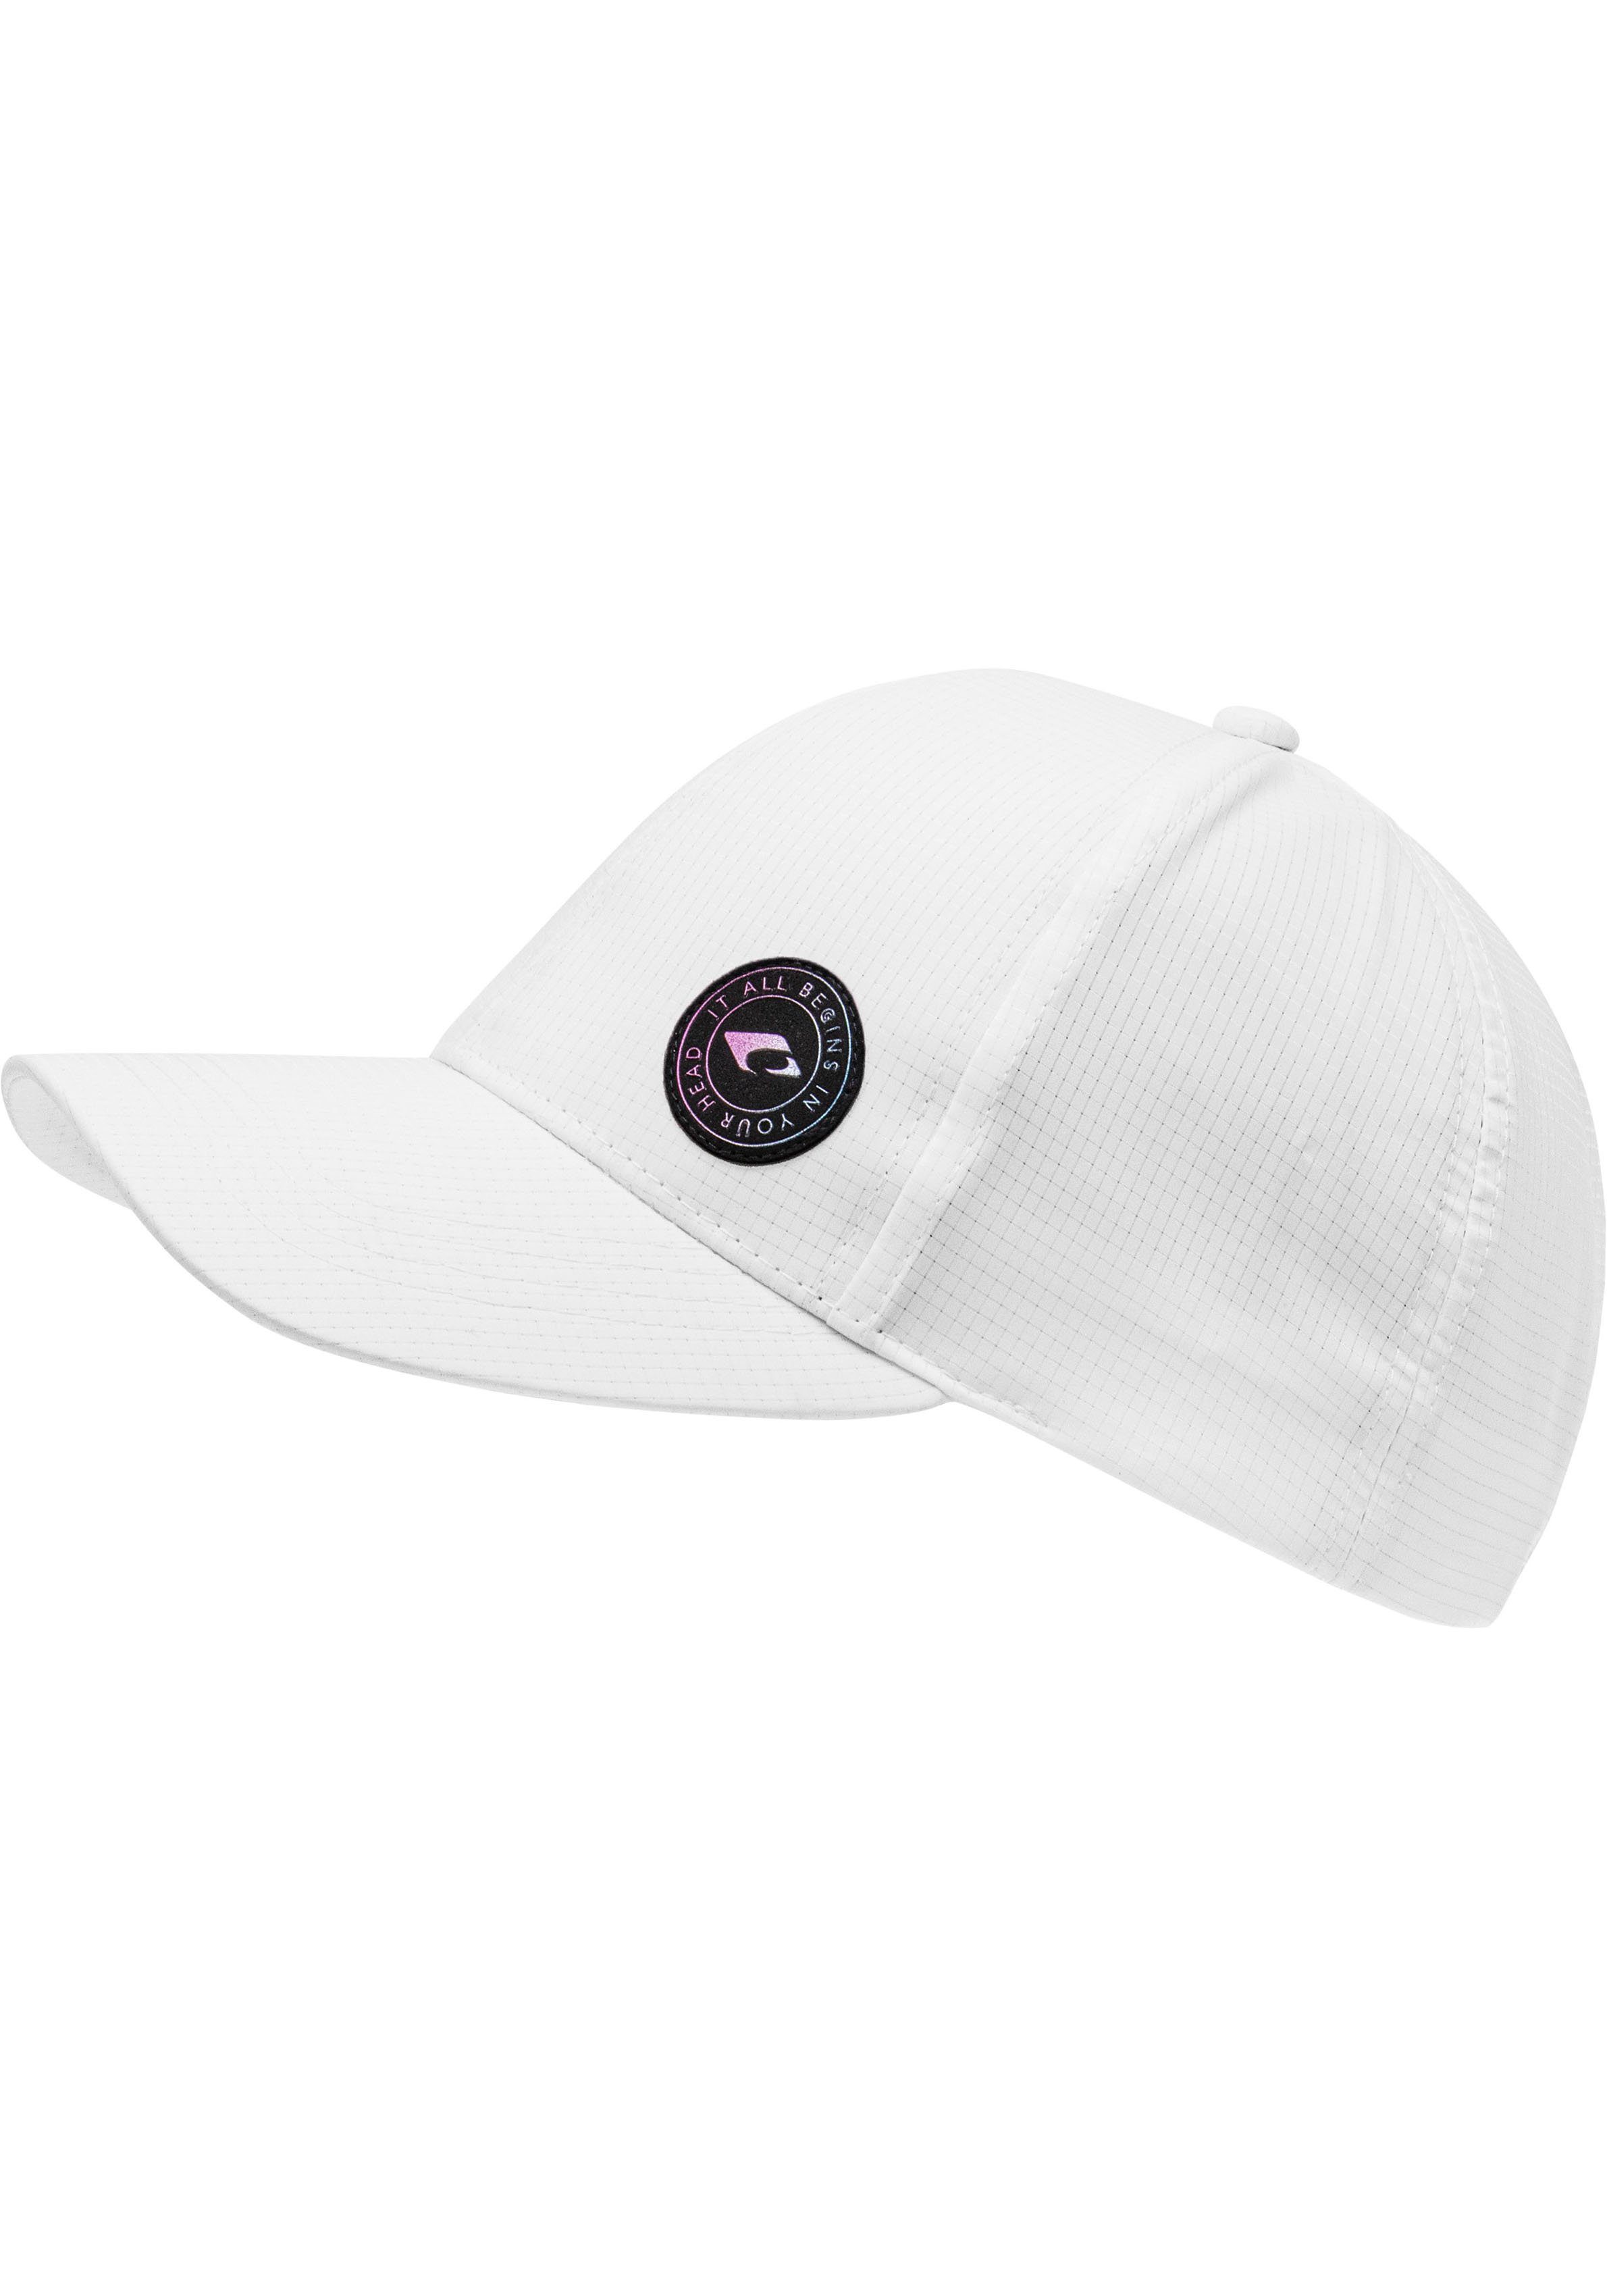 chillouts Baseball Cap Langley Hat, Individuell verstellbar